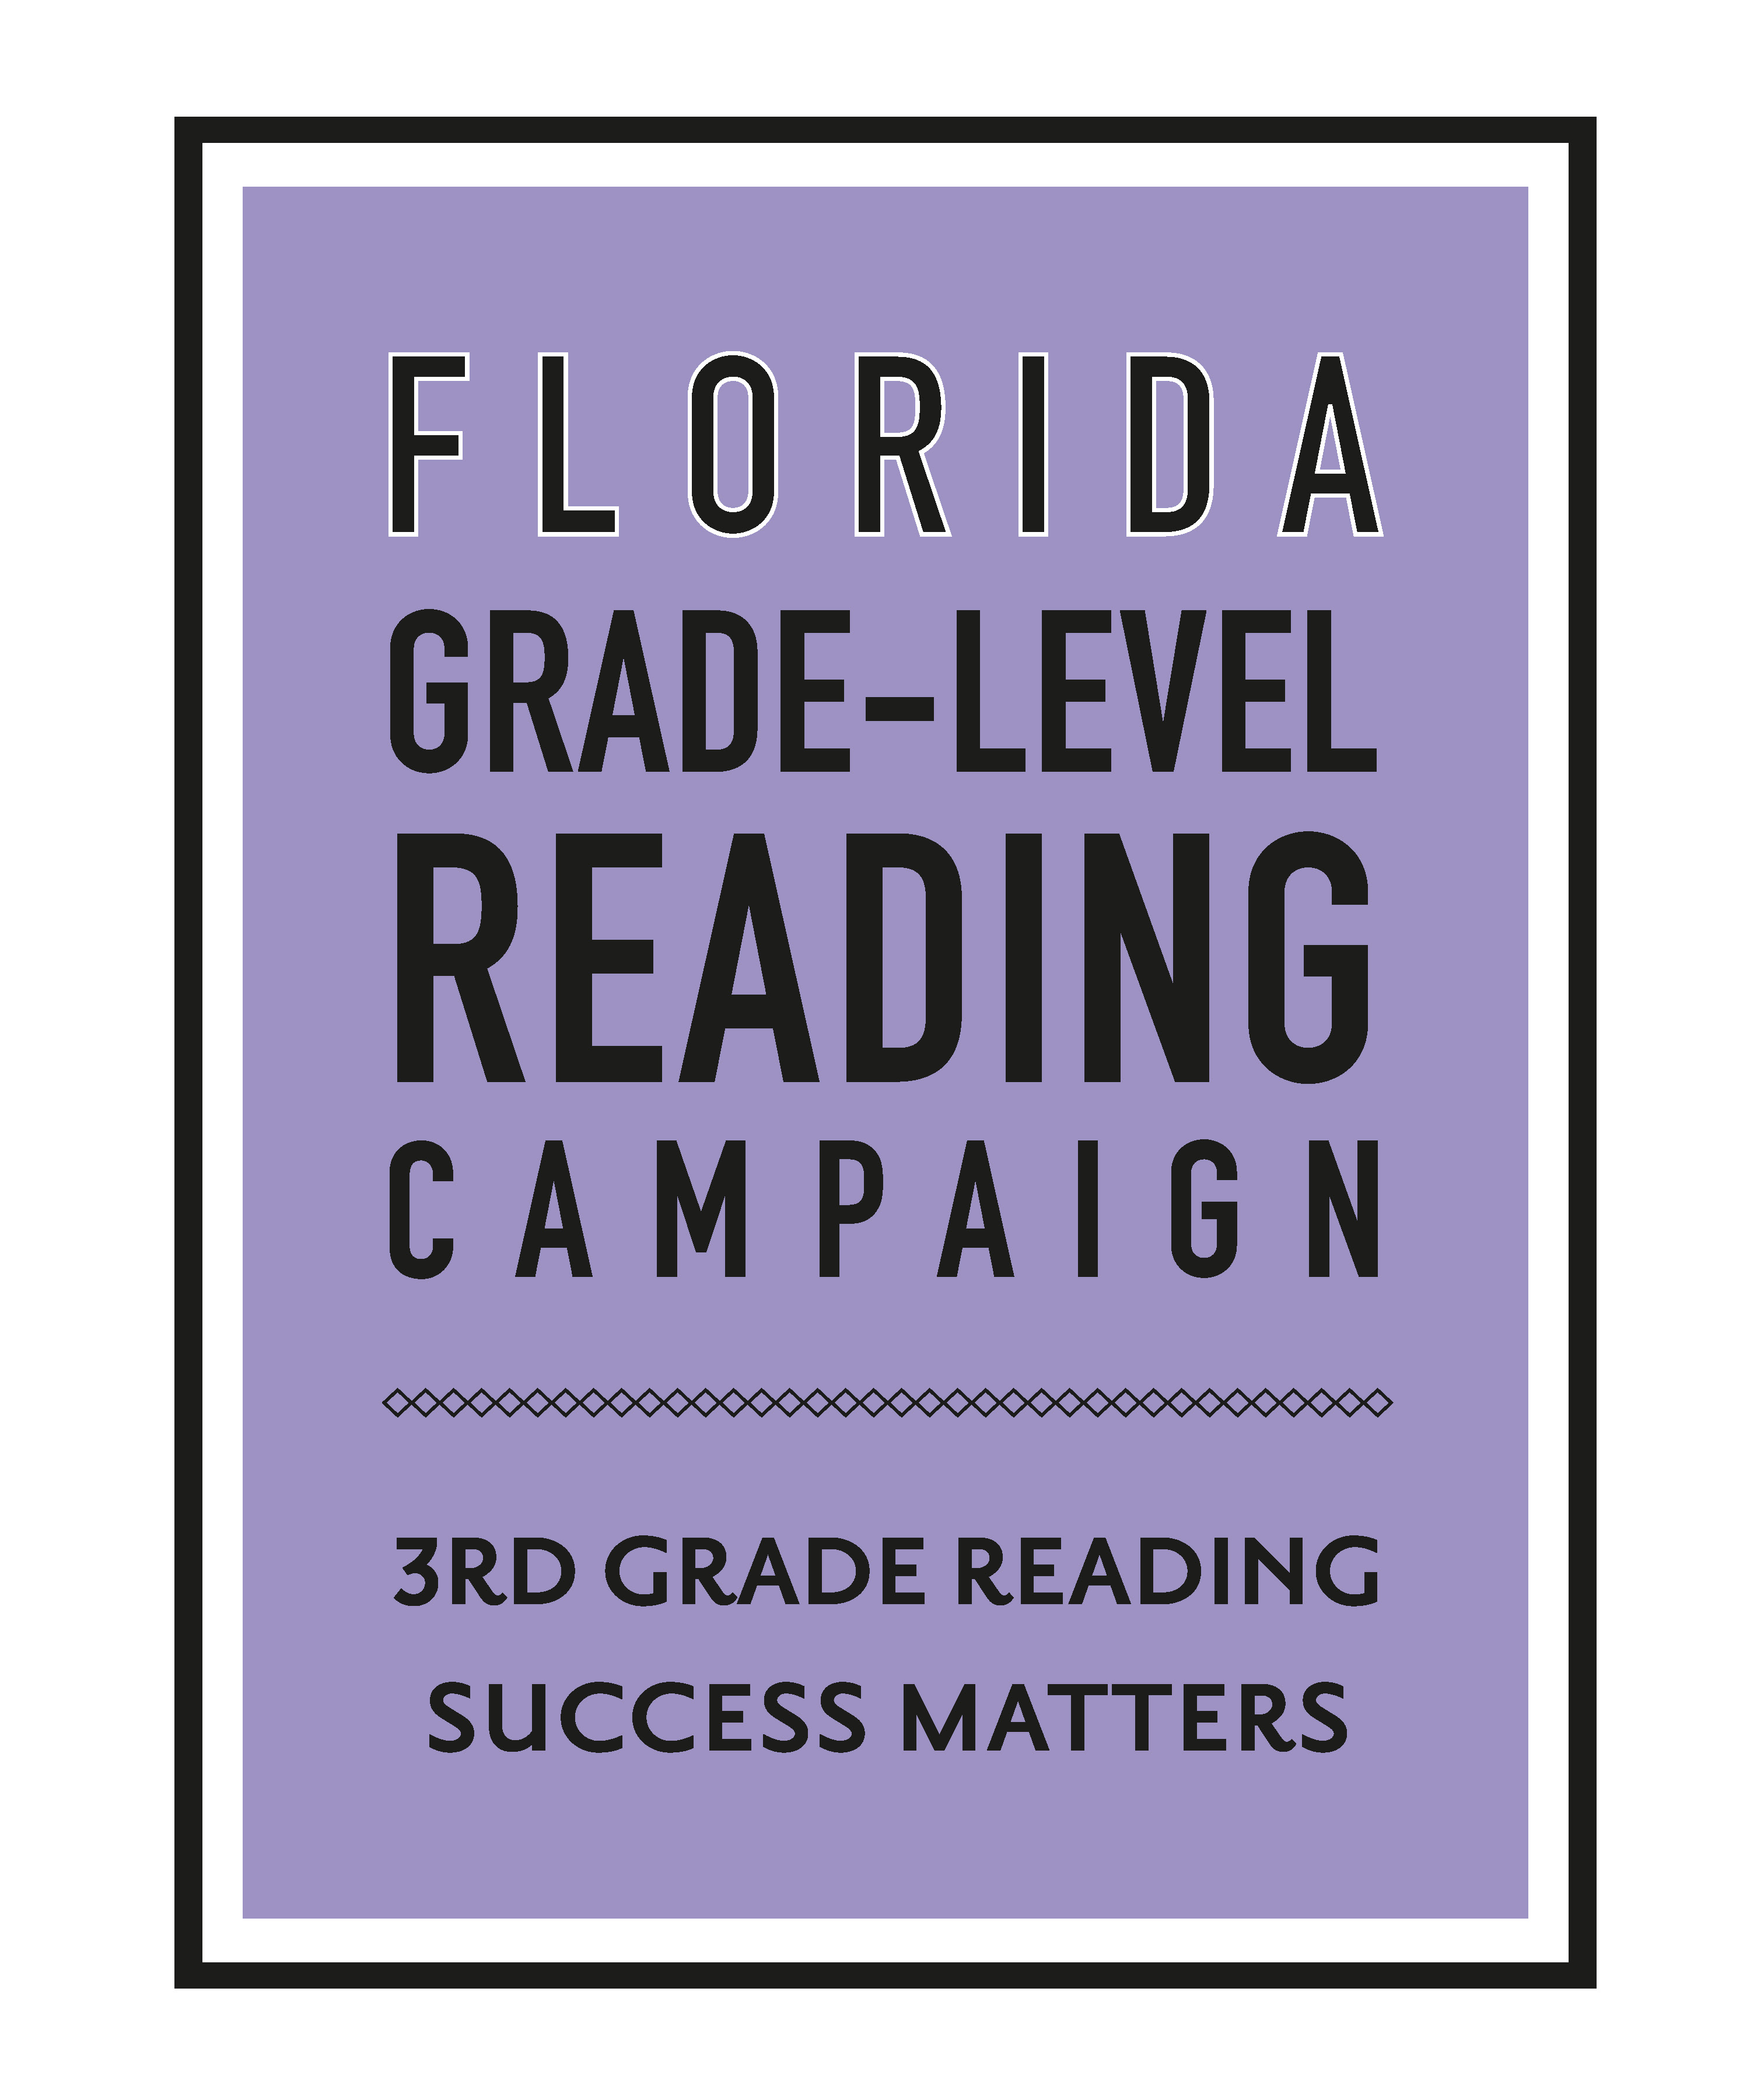 Florida Campaign for Grade-Level Reading